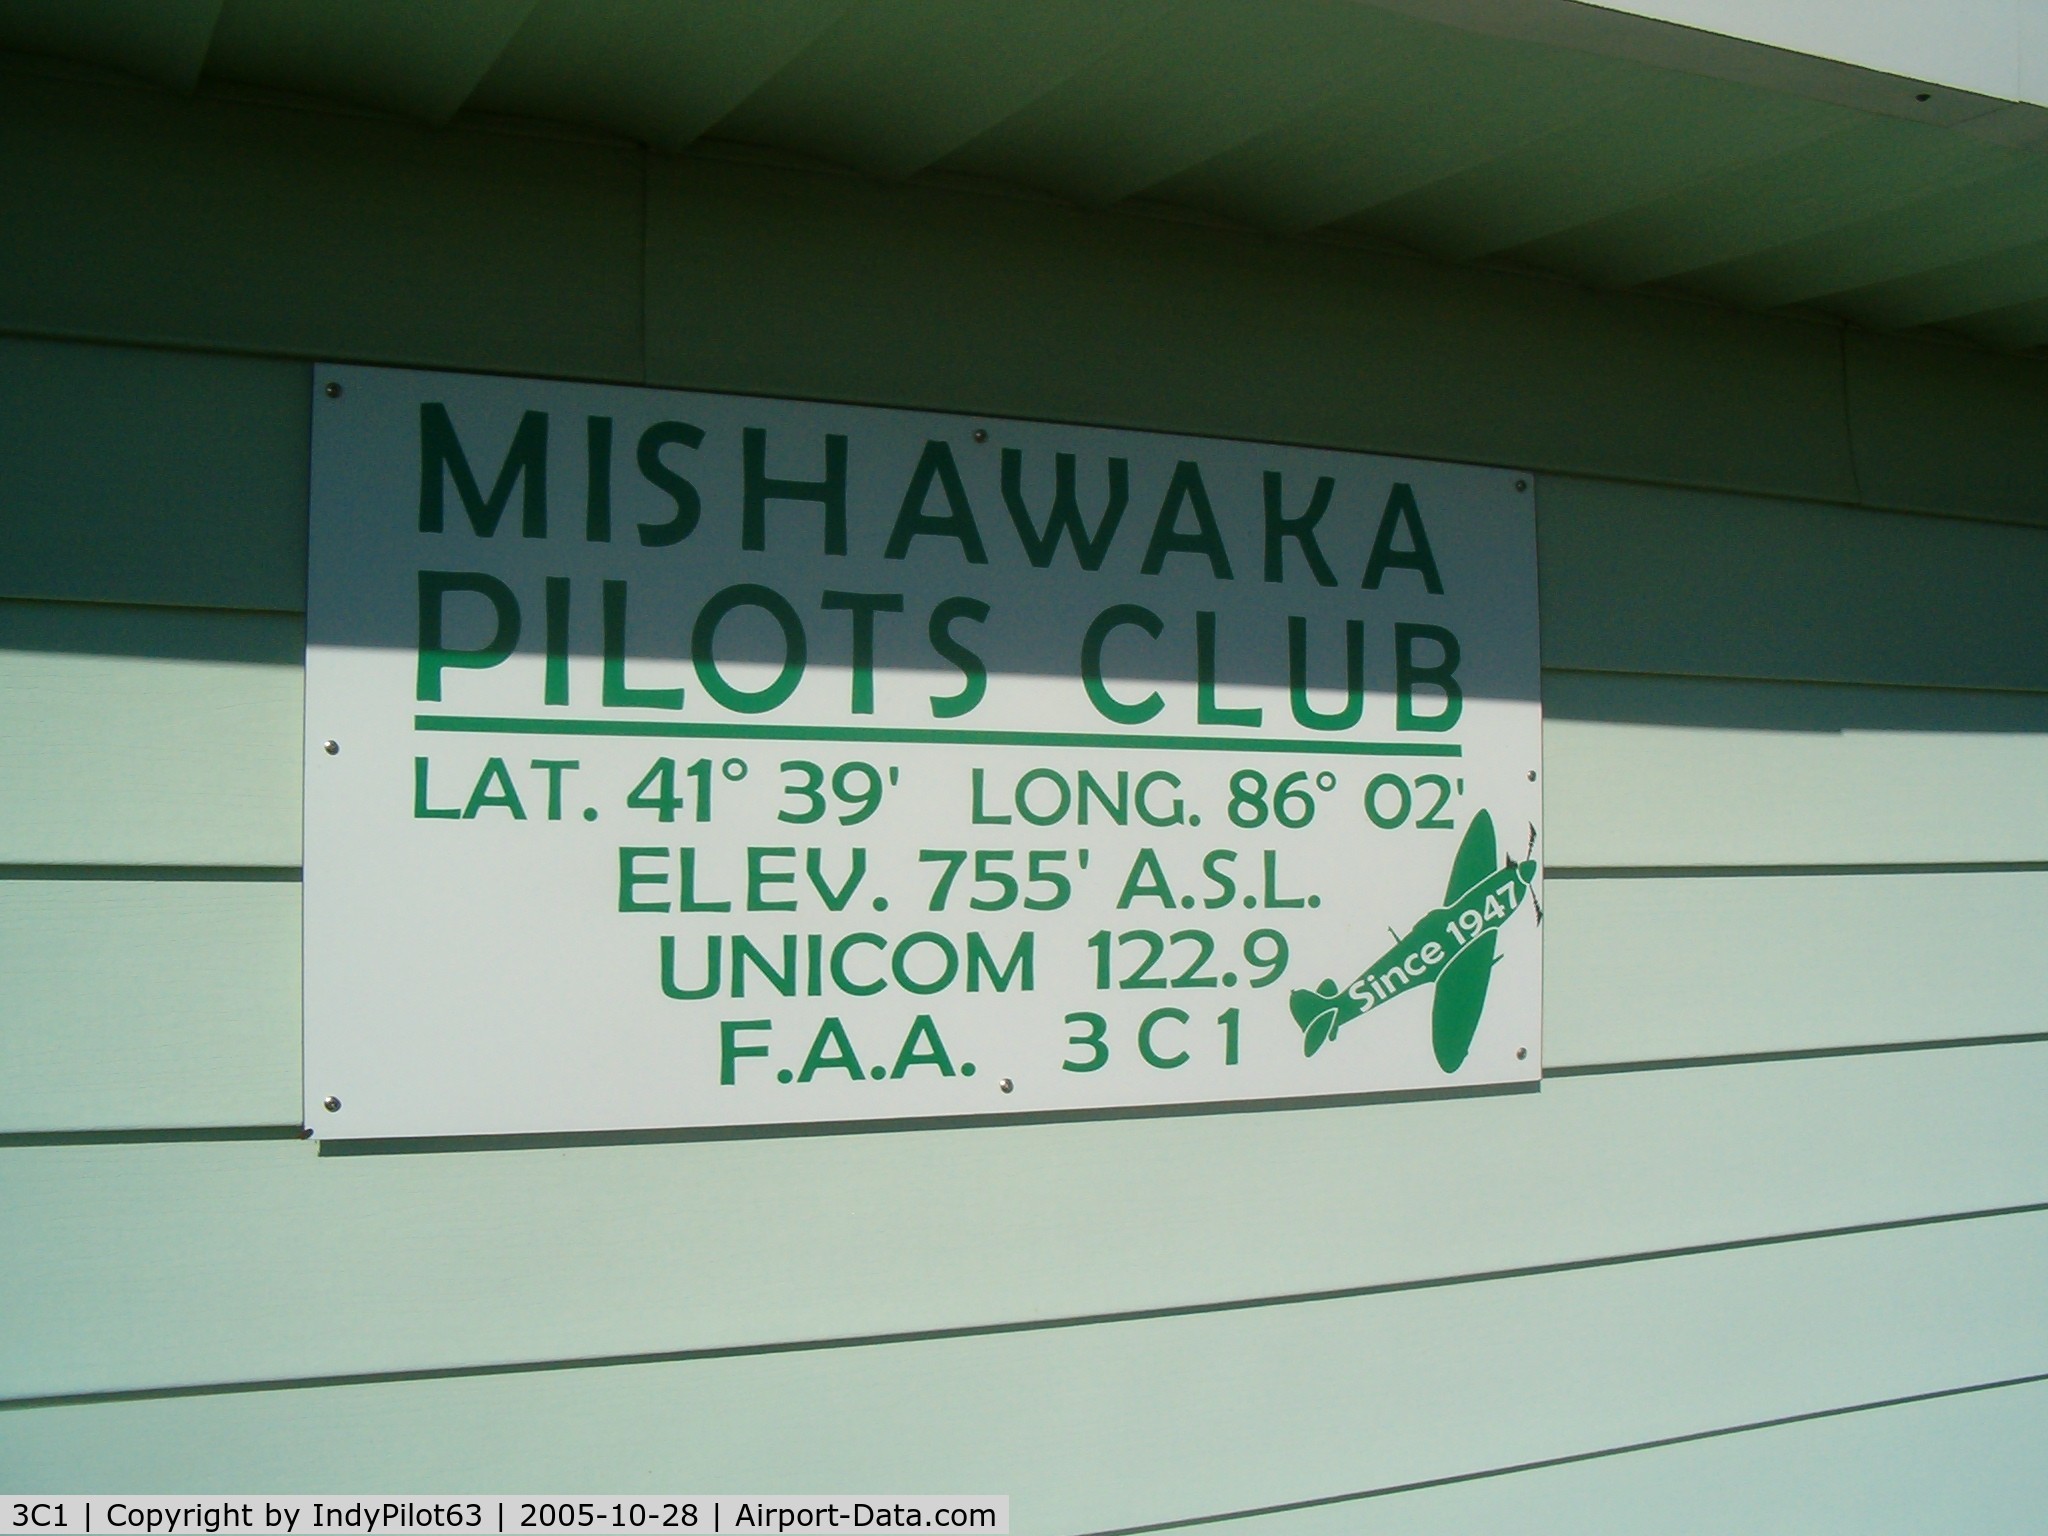 Mishawaka Pilots Club Airport (3C1) - Sign on the FBO building.